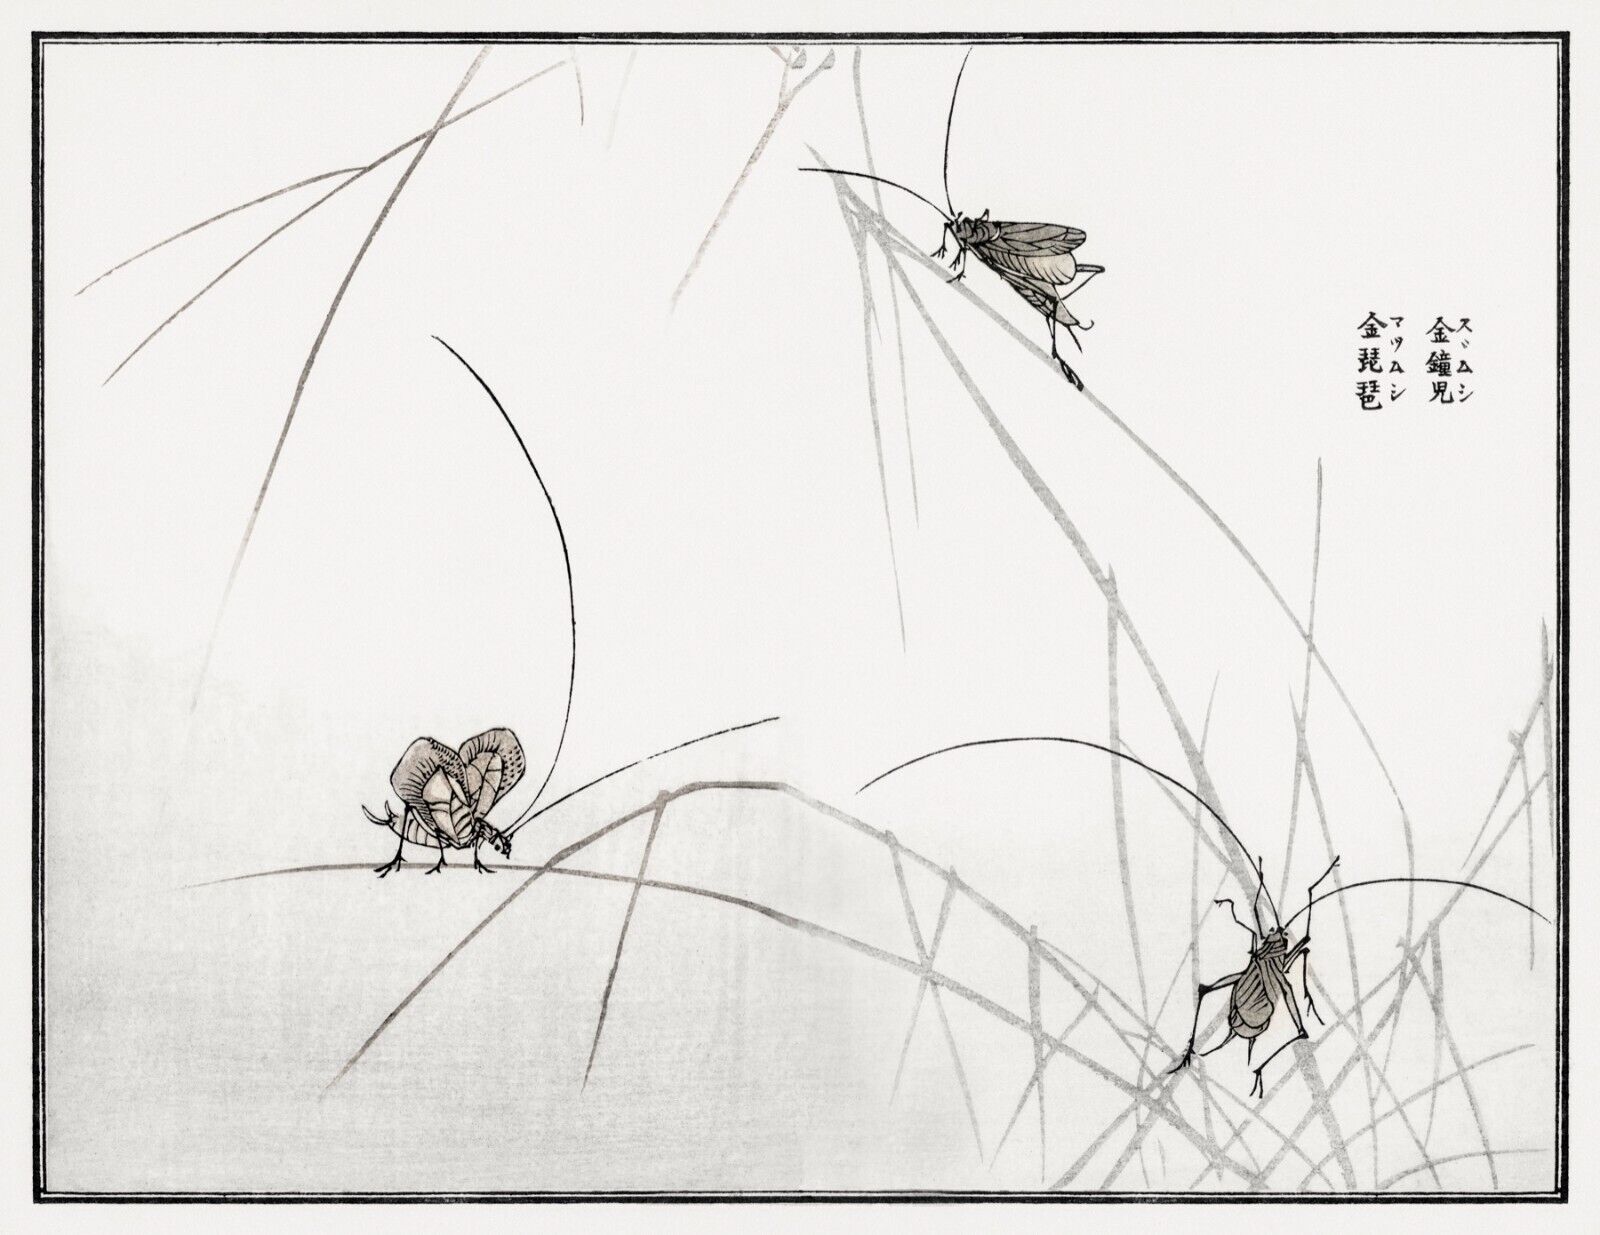 10067.Decor Poster.Room home wall.1910 Japan print.Morimoto Toko art.Cicadas